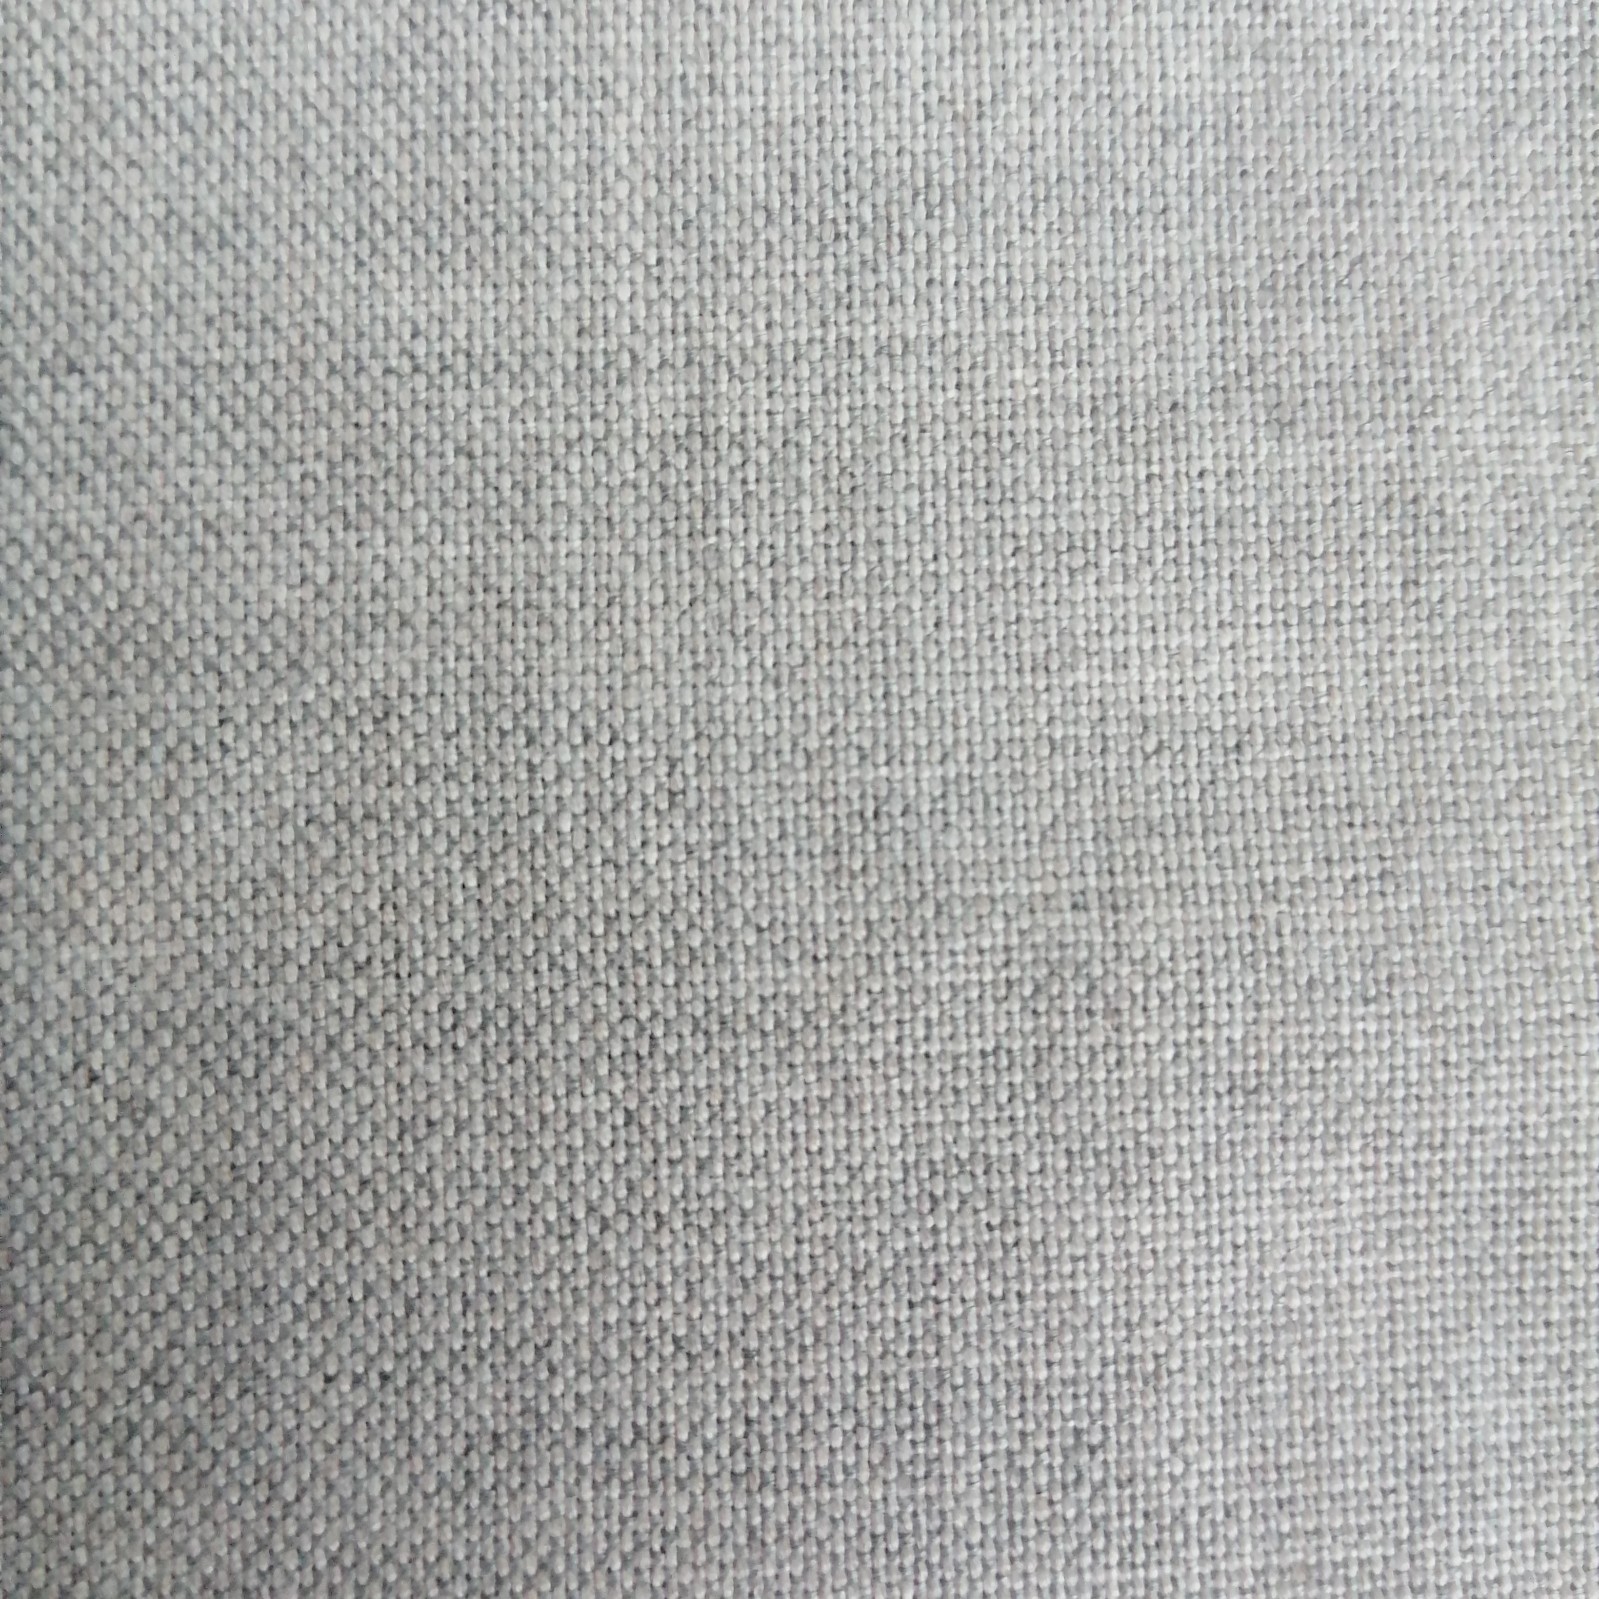 FB3316 dust proof fabric